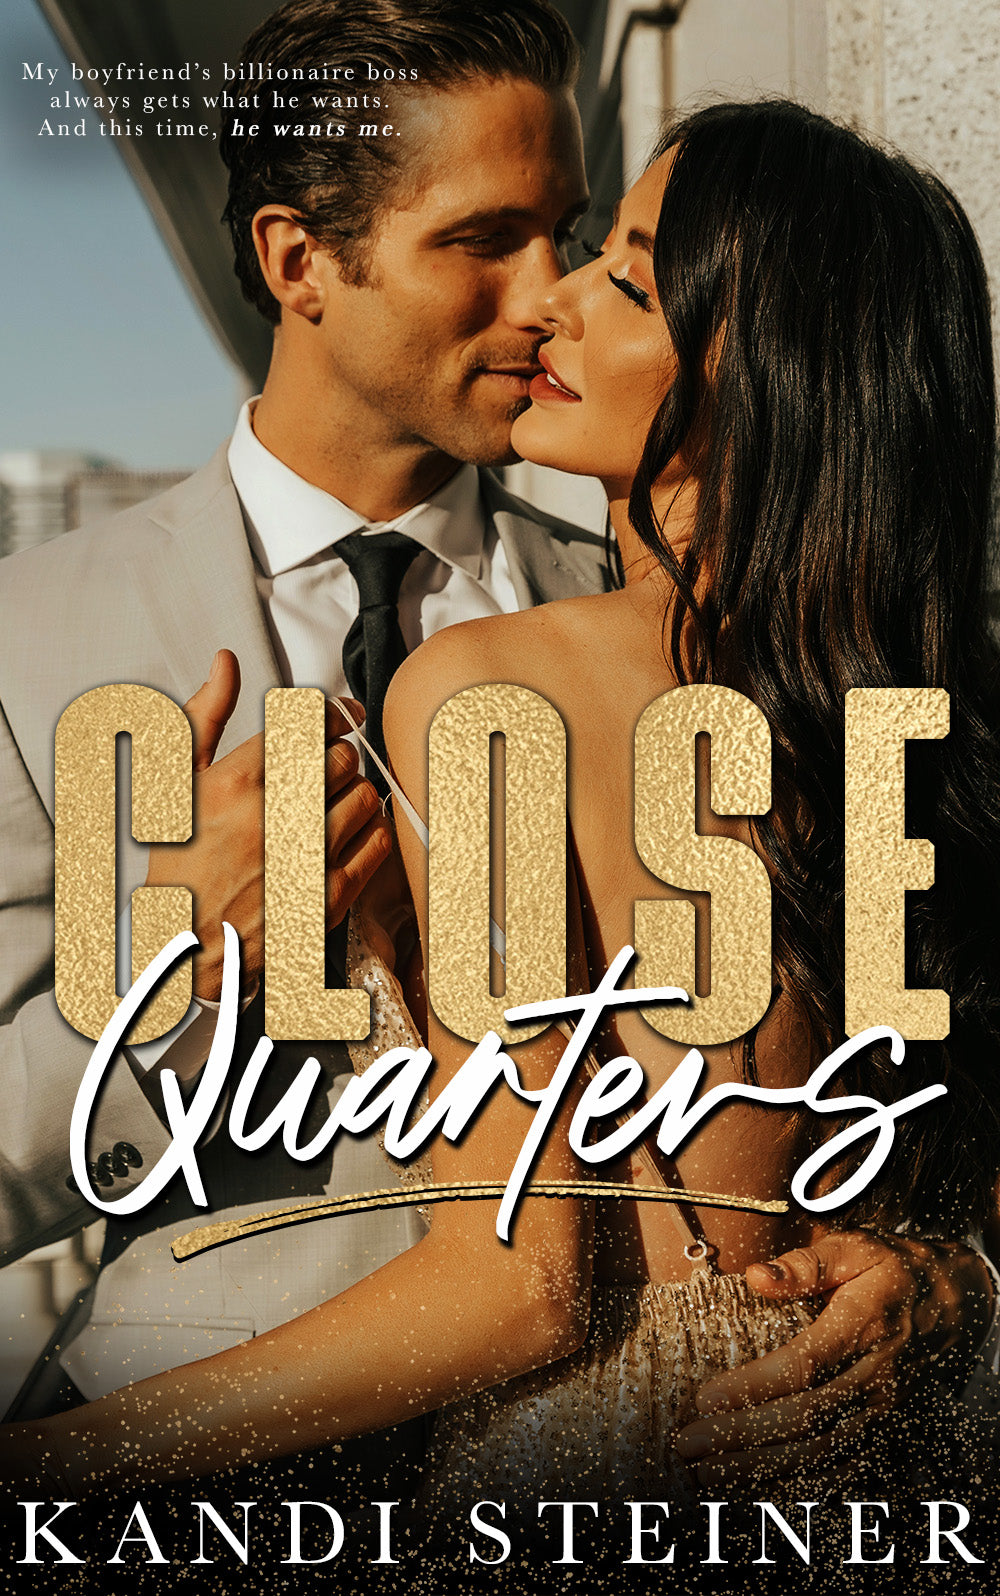 Close Quarters - Kandi Steiner